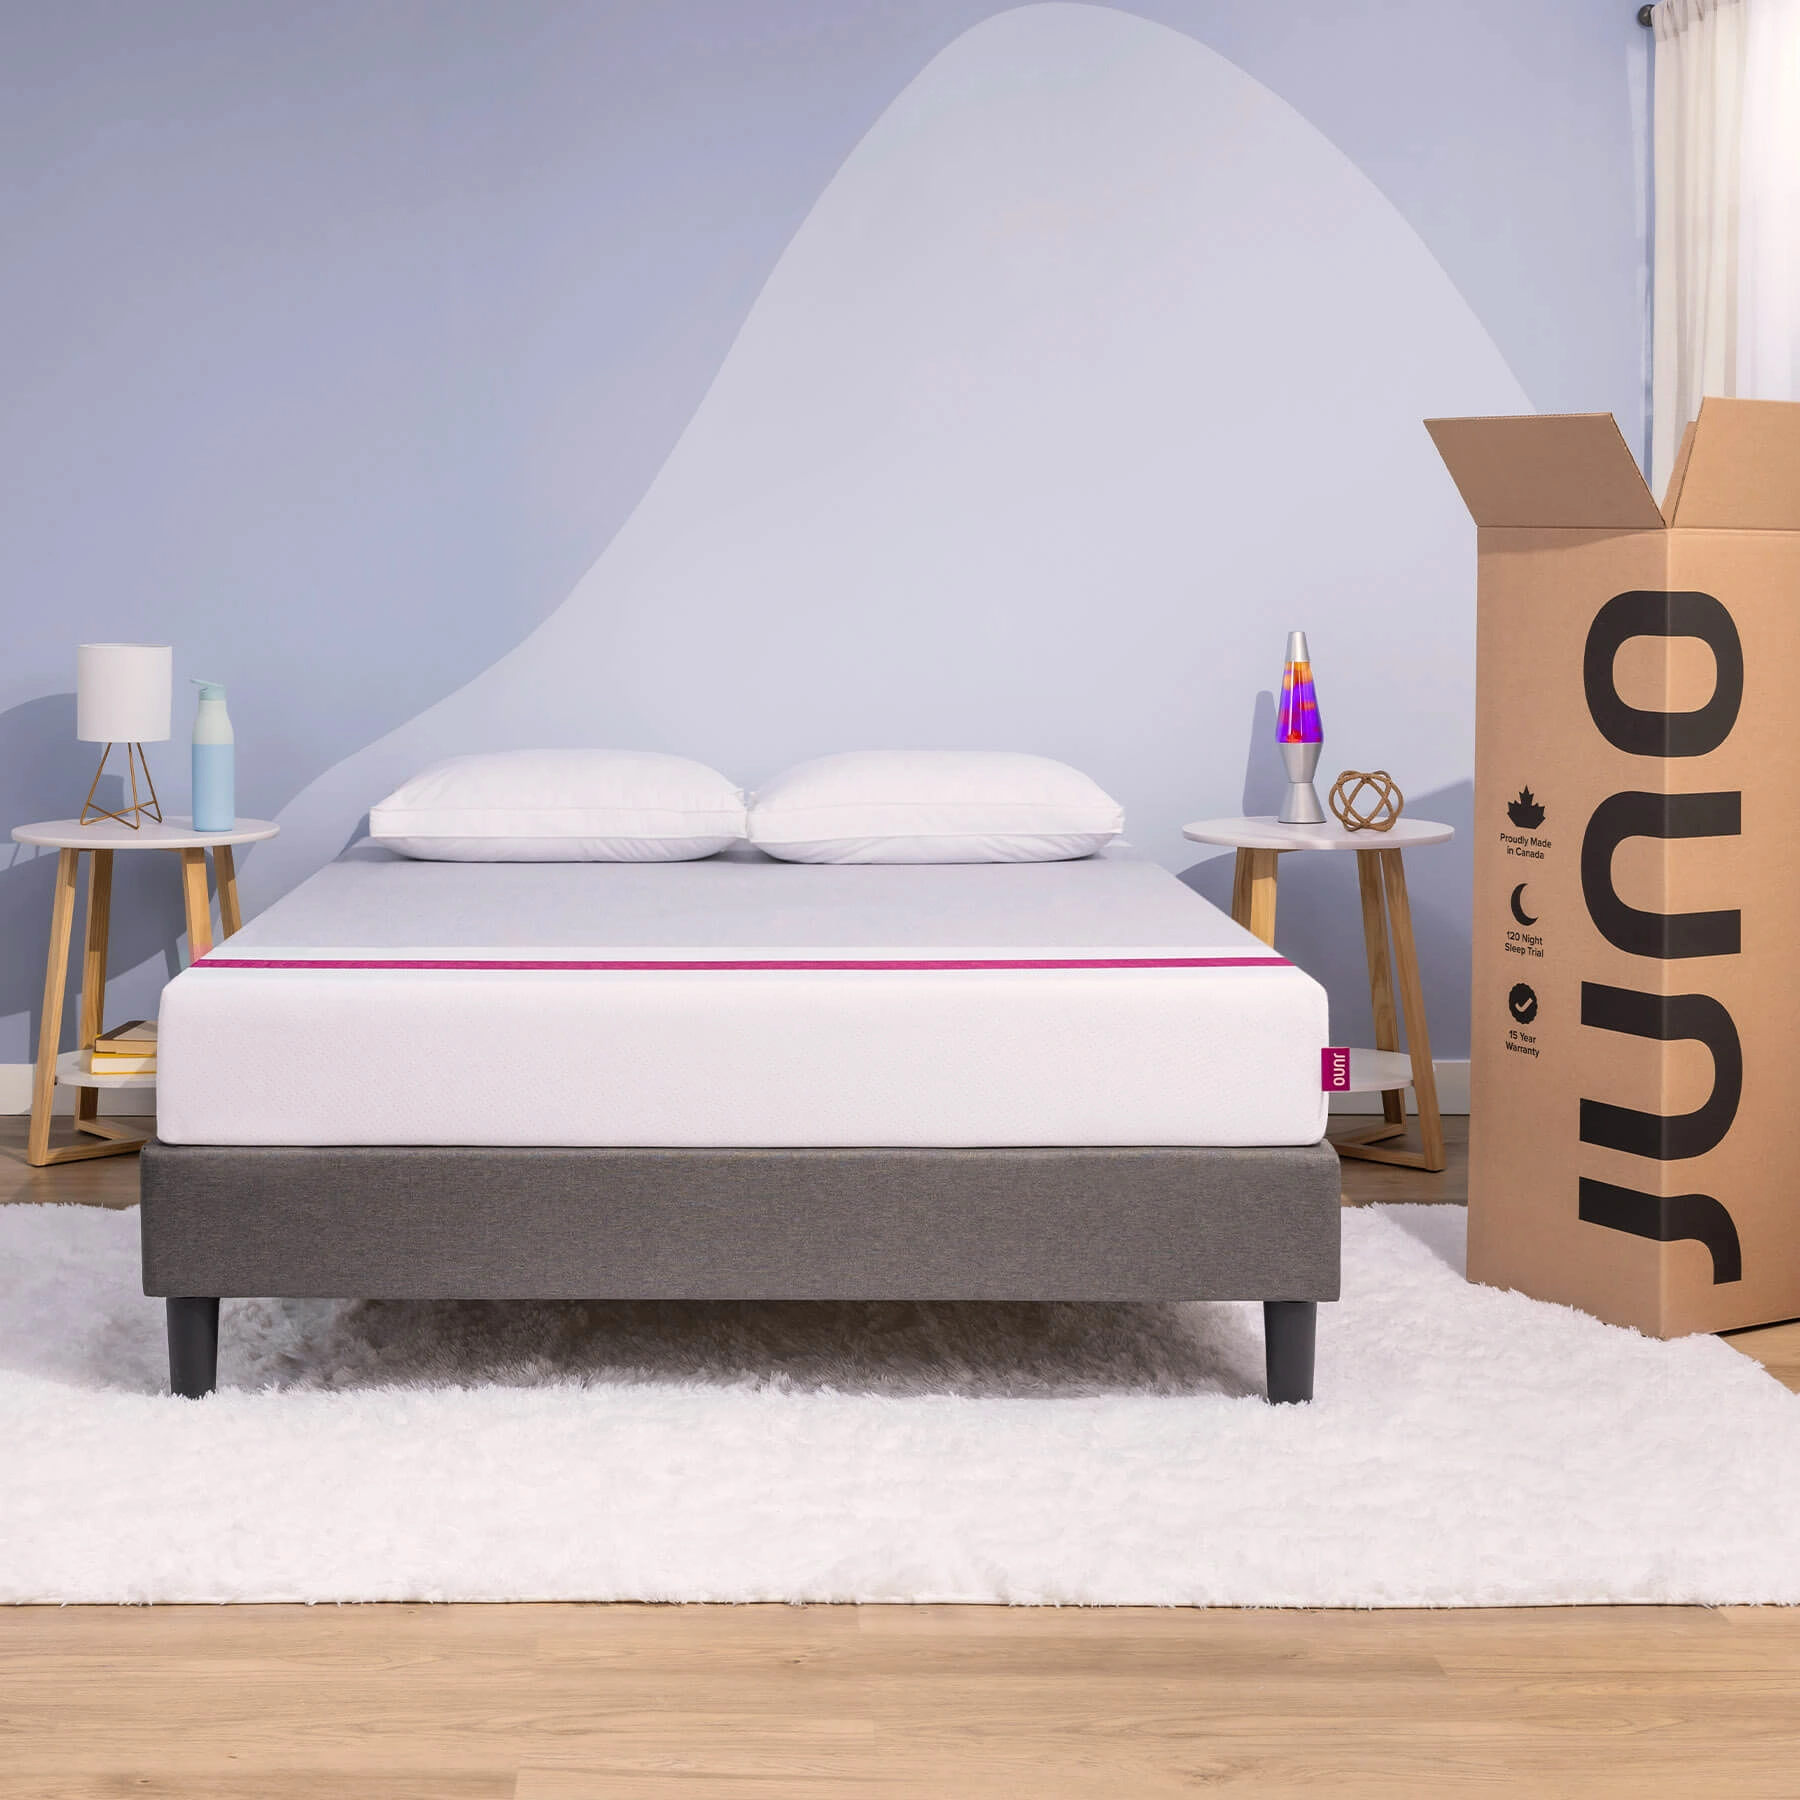 Juno mattress